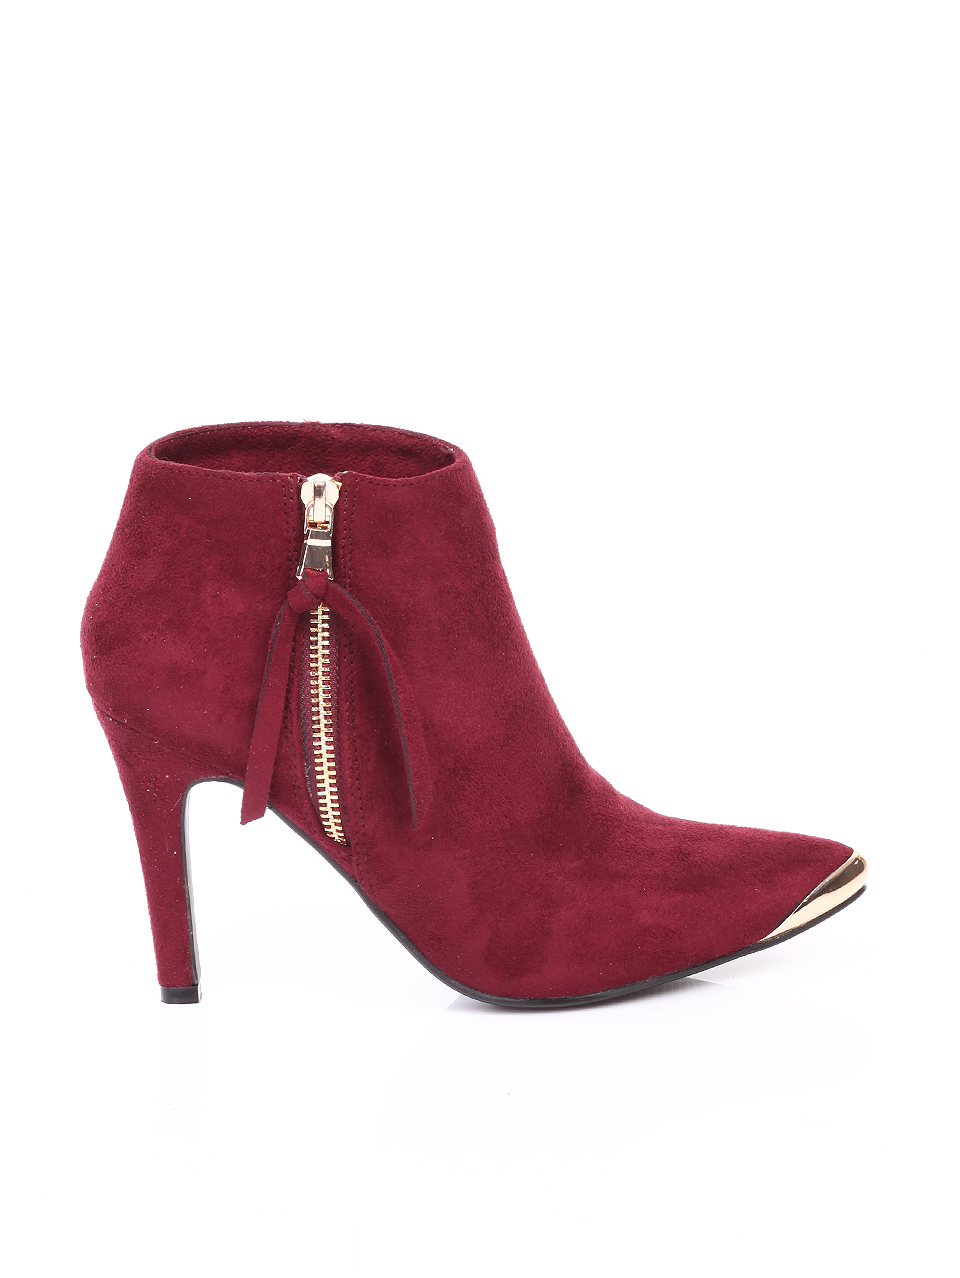 Marsala Boots. Marsala Red Boots. Burgundy Boots. Marsala High Heels. Winter Boots.